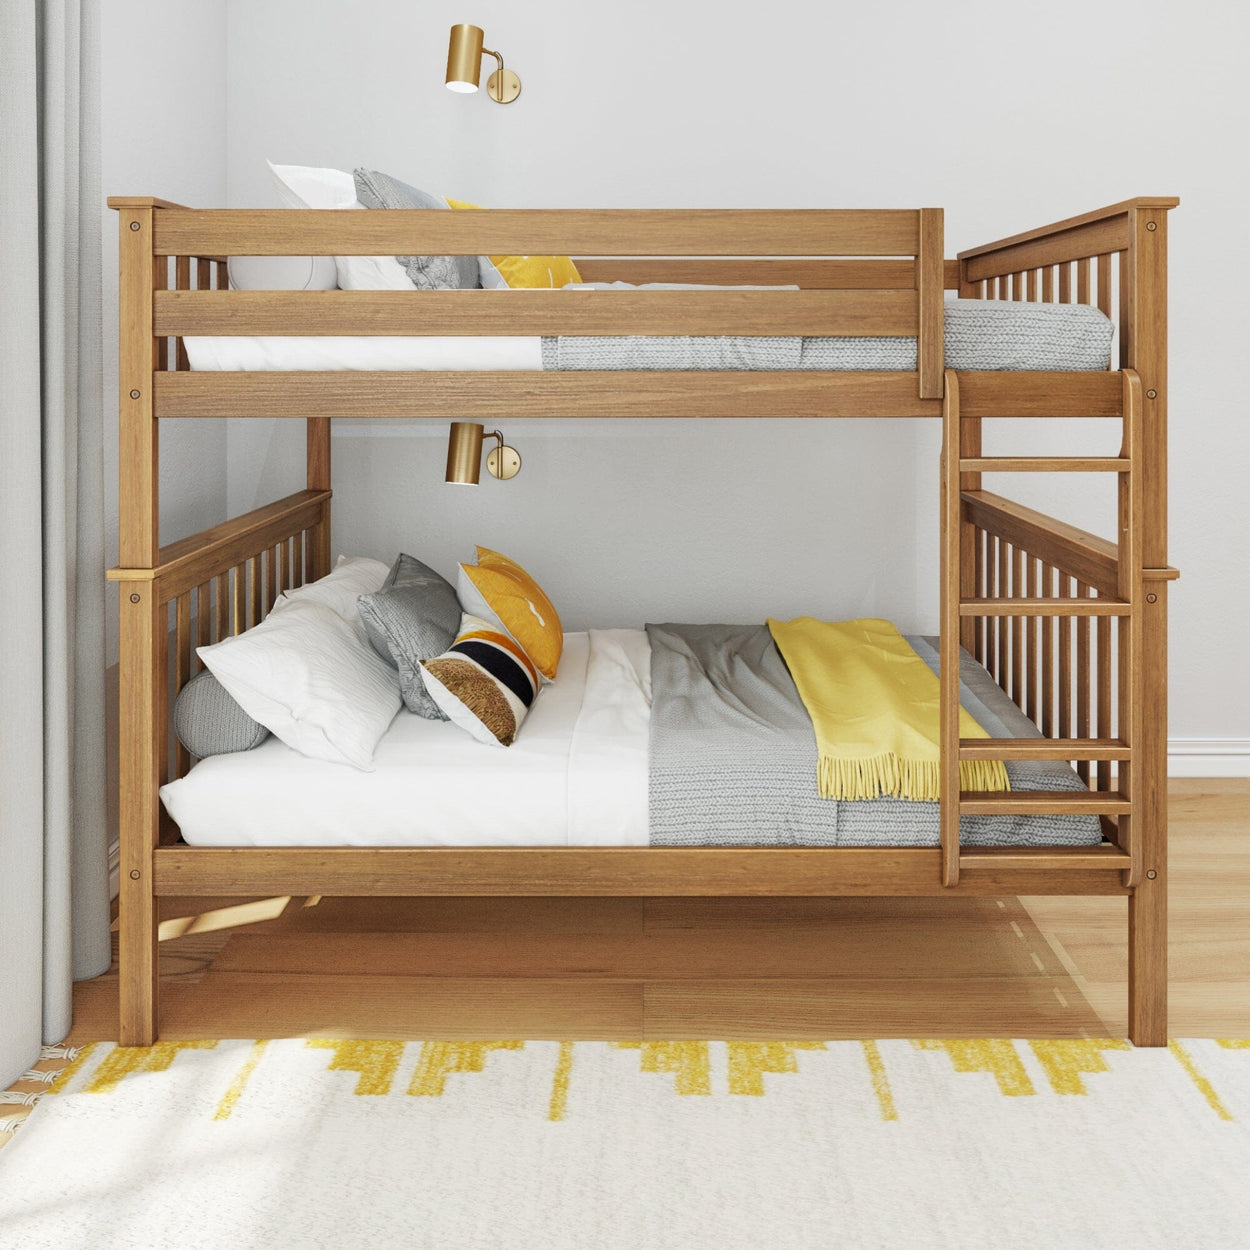 180251-007 : Bunk Beds Full over Full Bunk Bed, Pecan